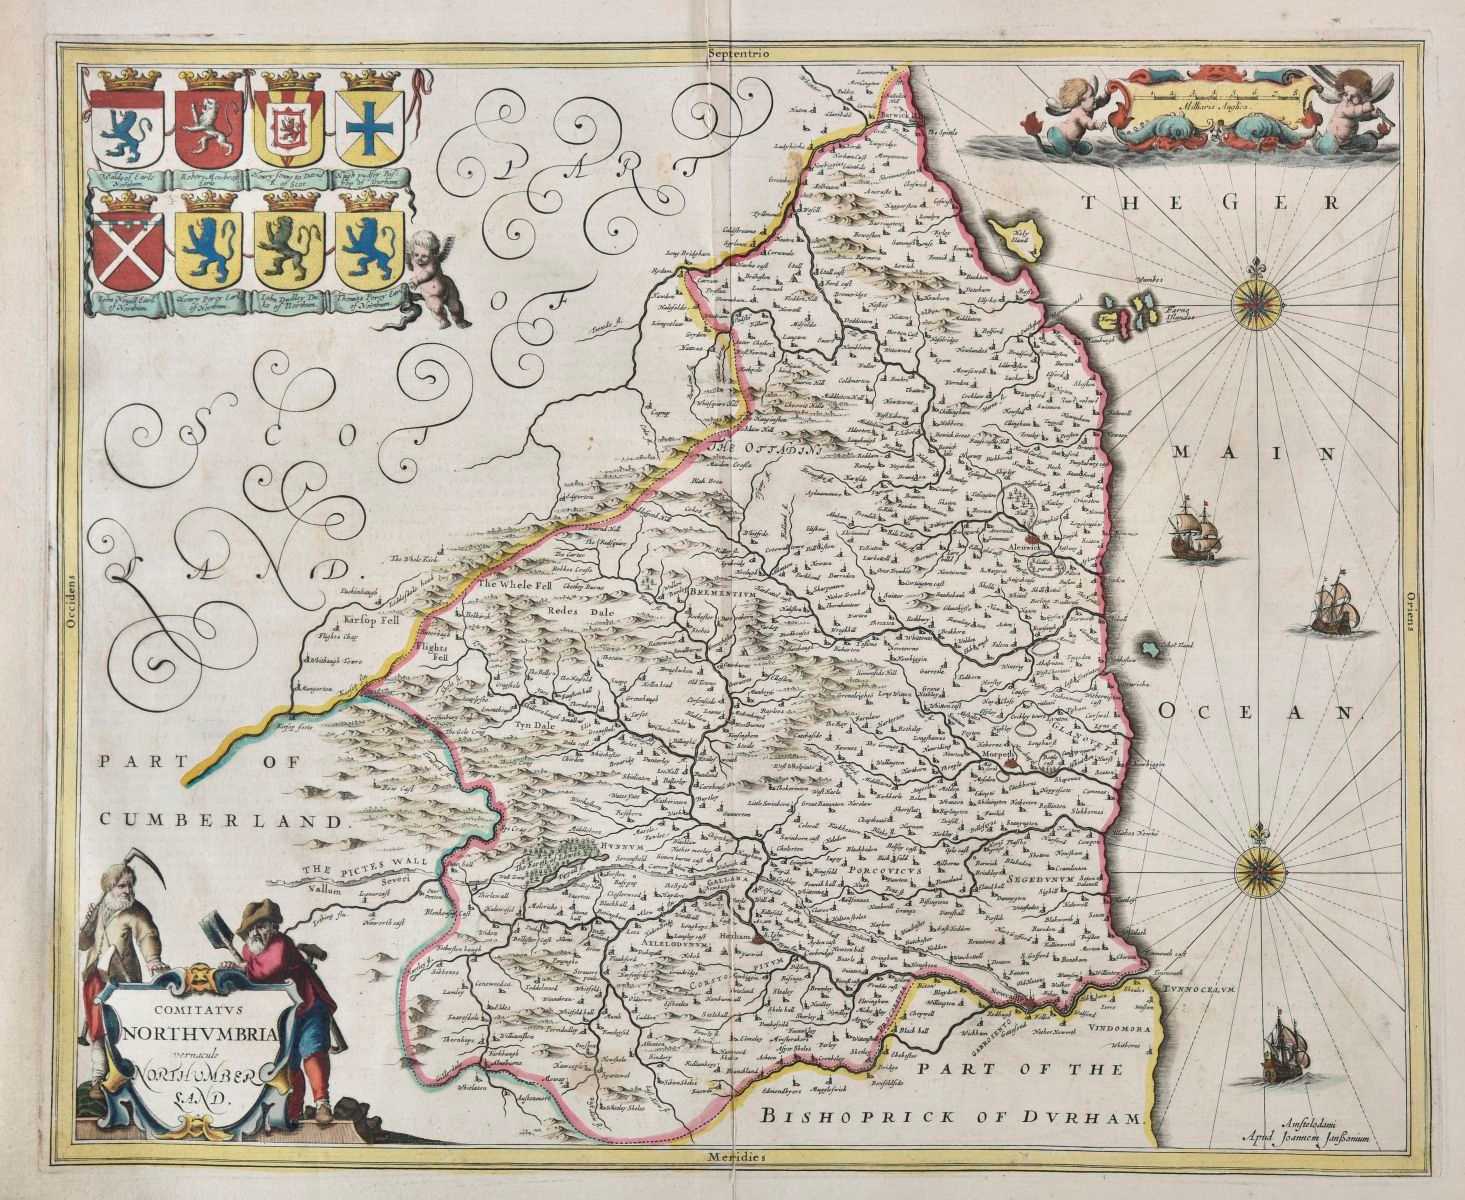 Lot 68 - Northumberland. Jansson (Jan), Comitatus Northumbria vernacule Northumberland, circa 1648